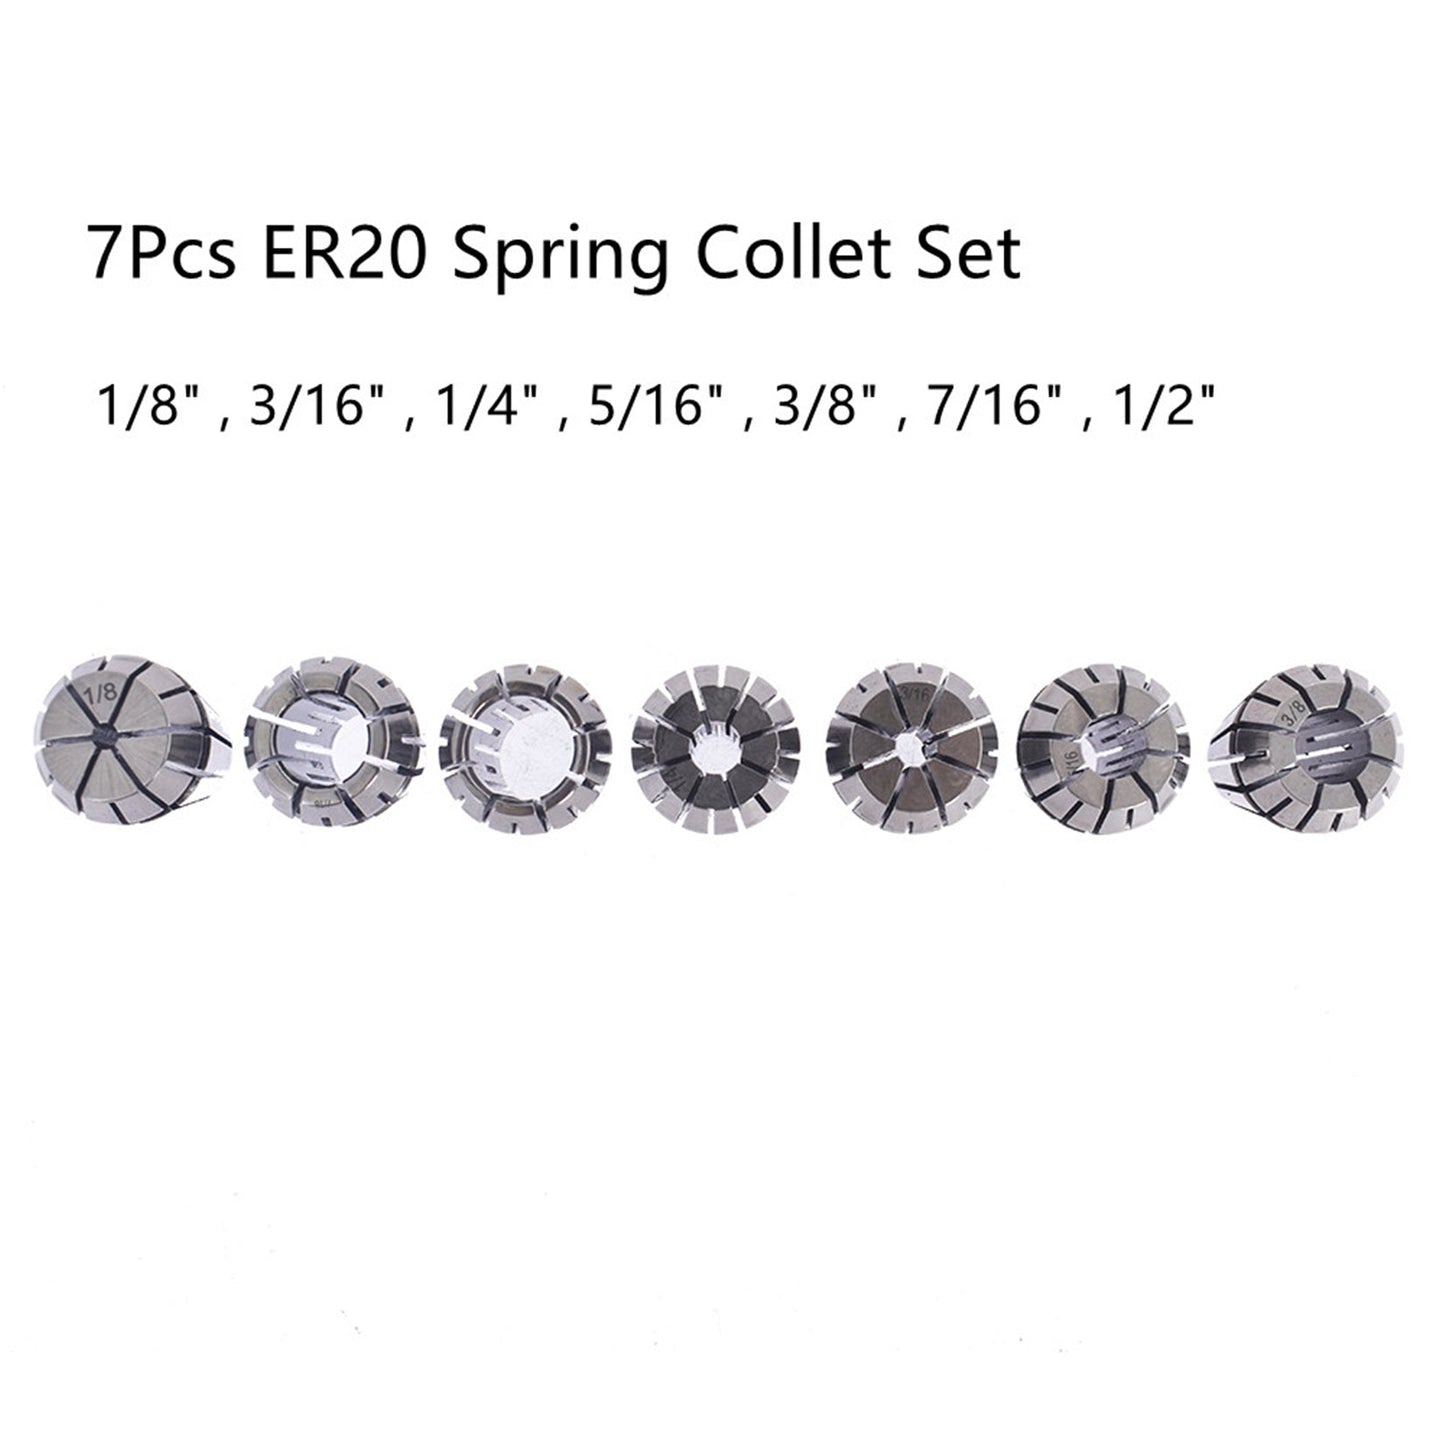 findmall  7Pcs ER20 Spring Collet Set 1/8-1/2 for CNC Milling Lathe Tool Workholding Engraving Machine FINDMALLPARTS